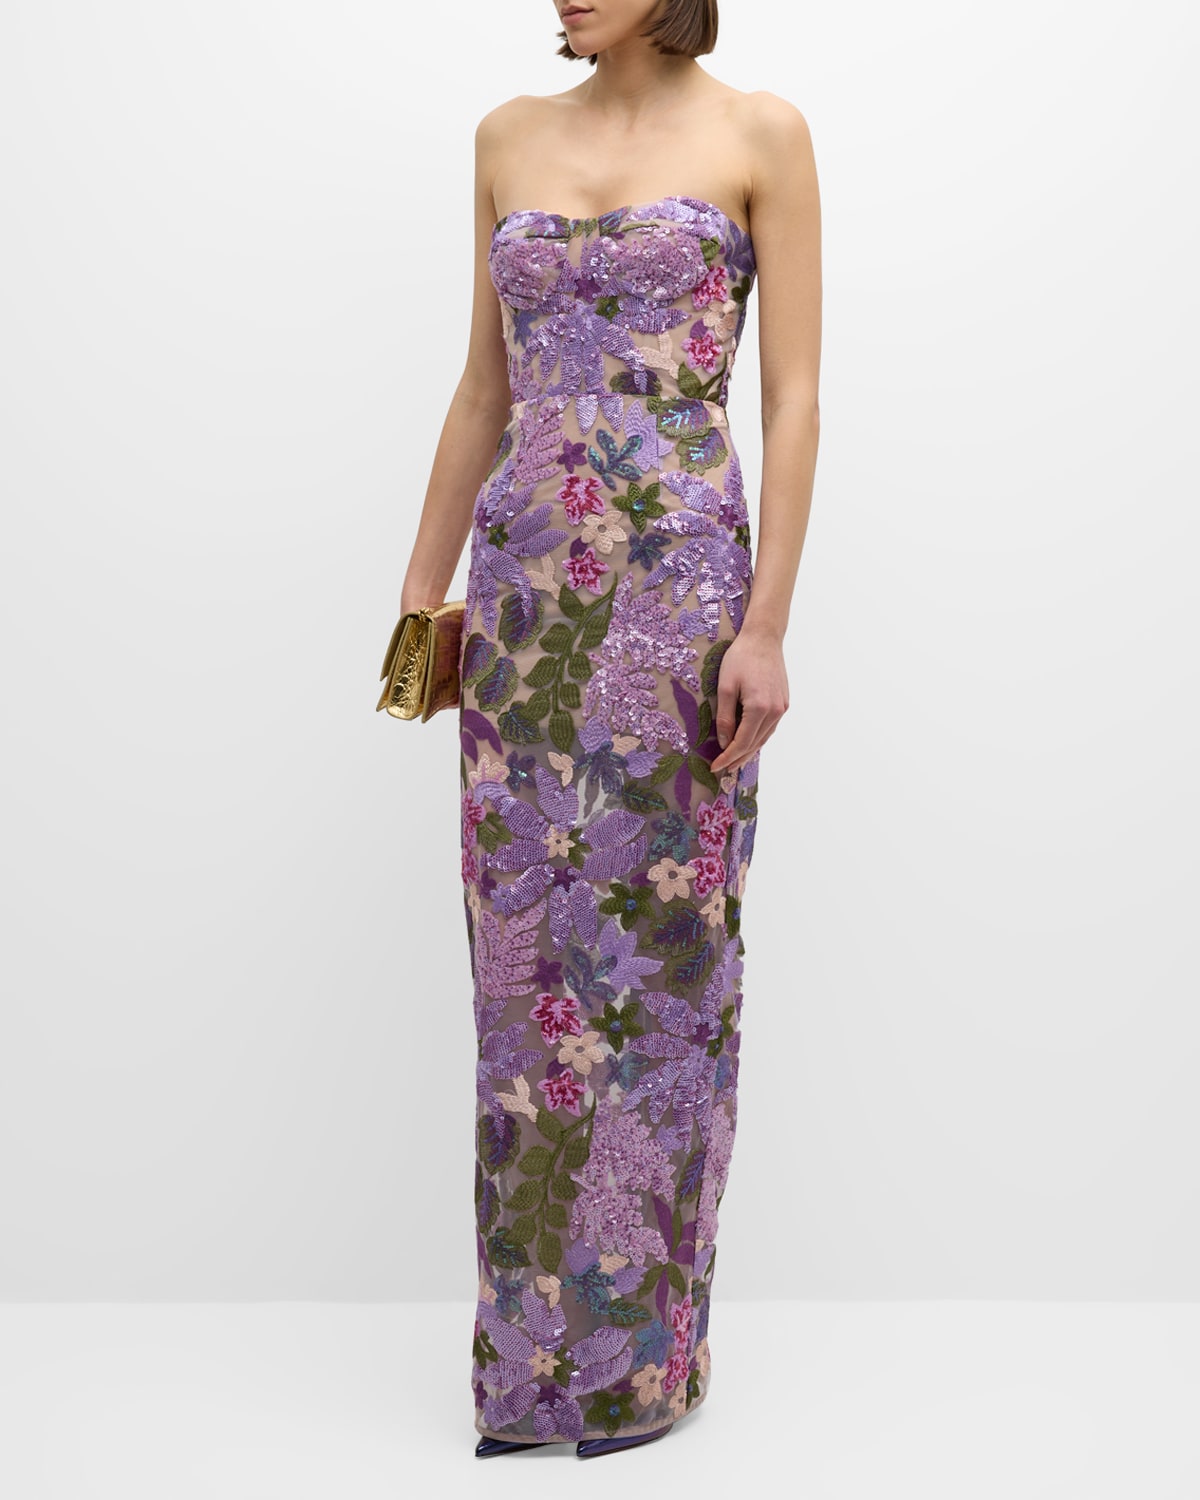 Olivia Mark – Womens Sleeveless High-Slit Maxi Dress with Built-In